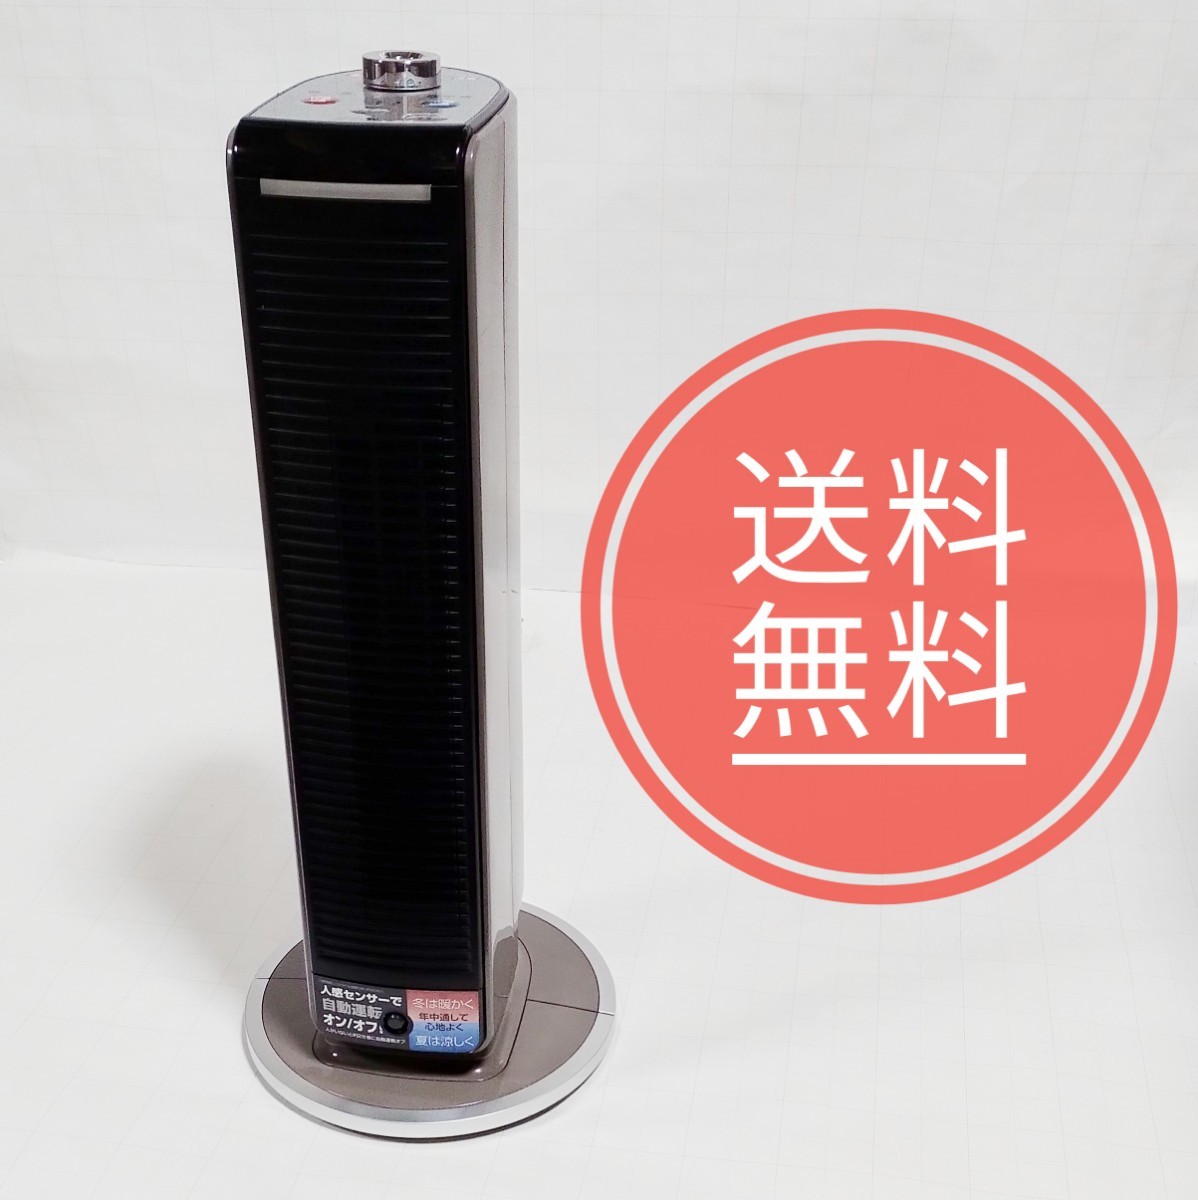 [ free shipping ]2021 year made * Koizumi * ventilator talent attaching fan heater *KHF-0818